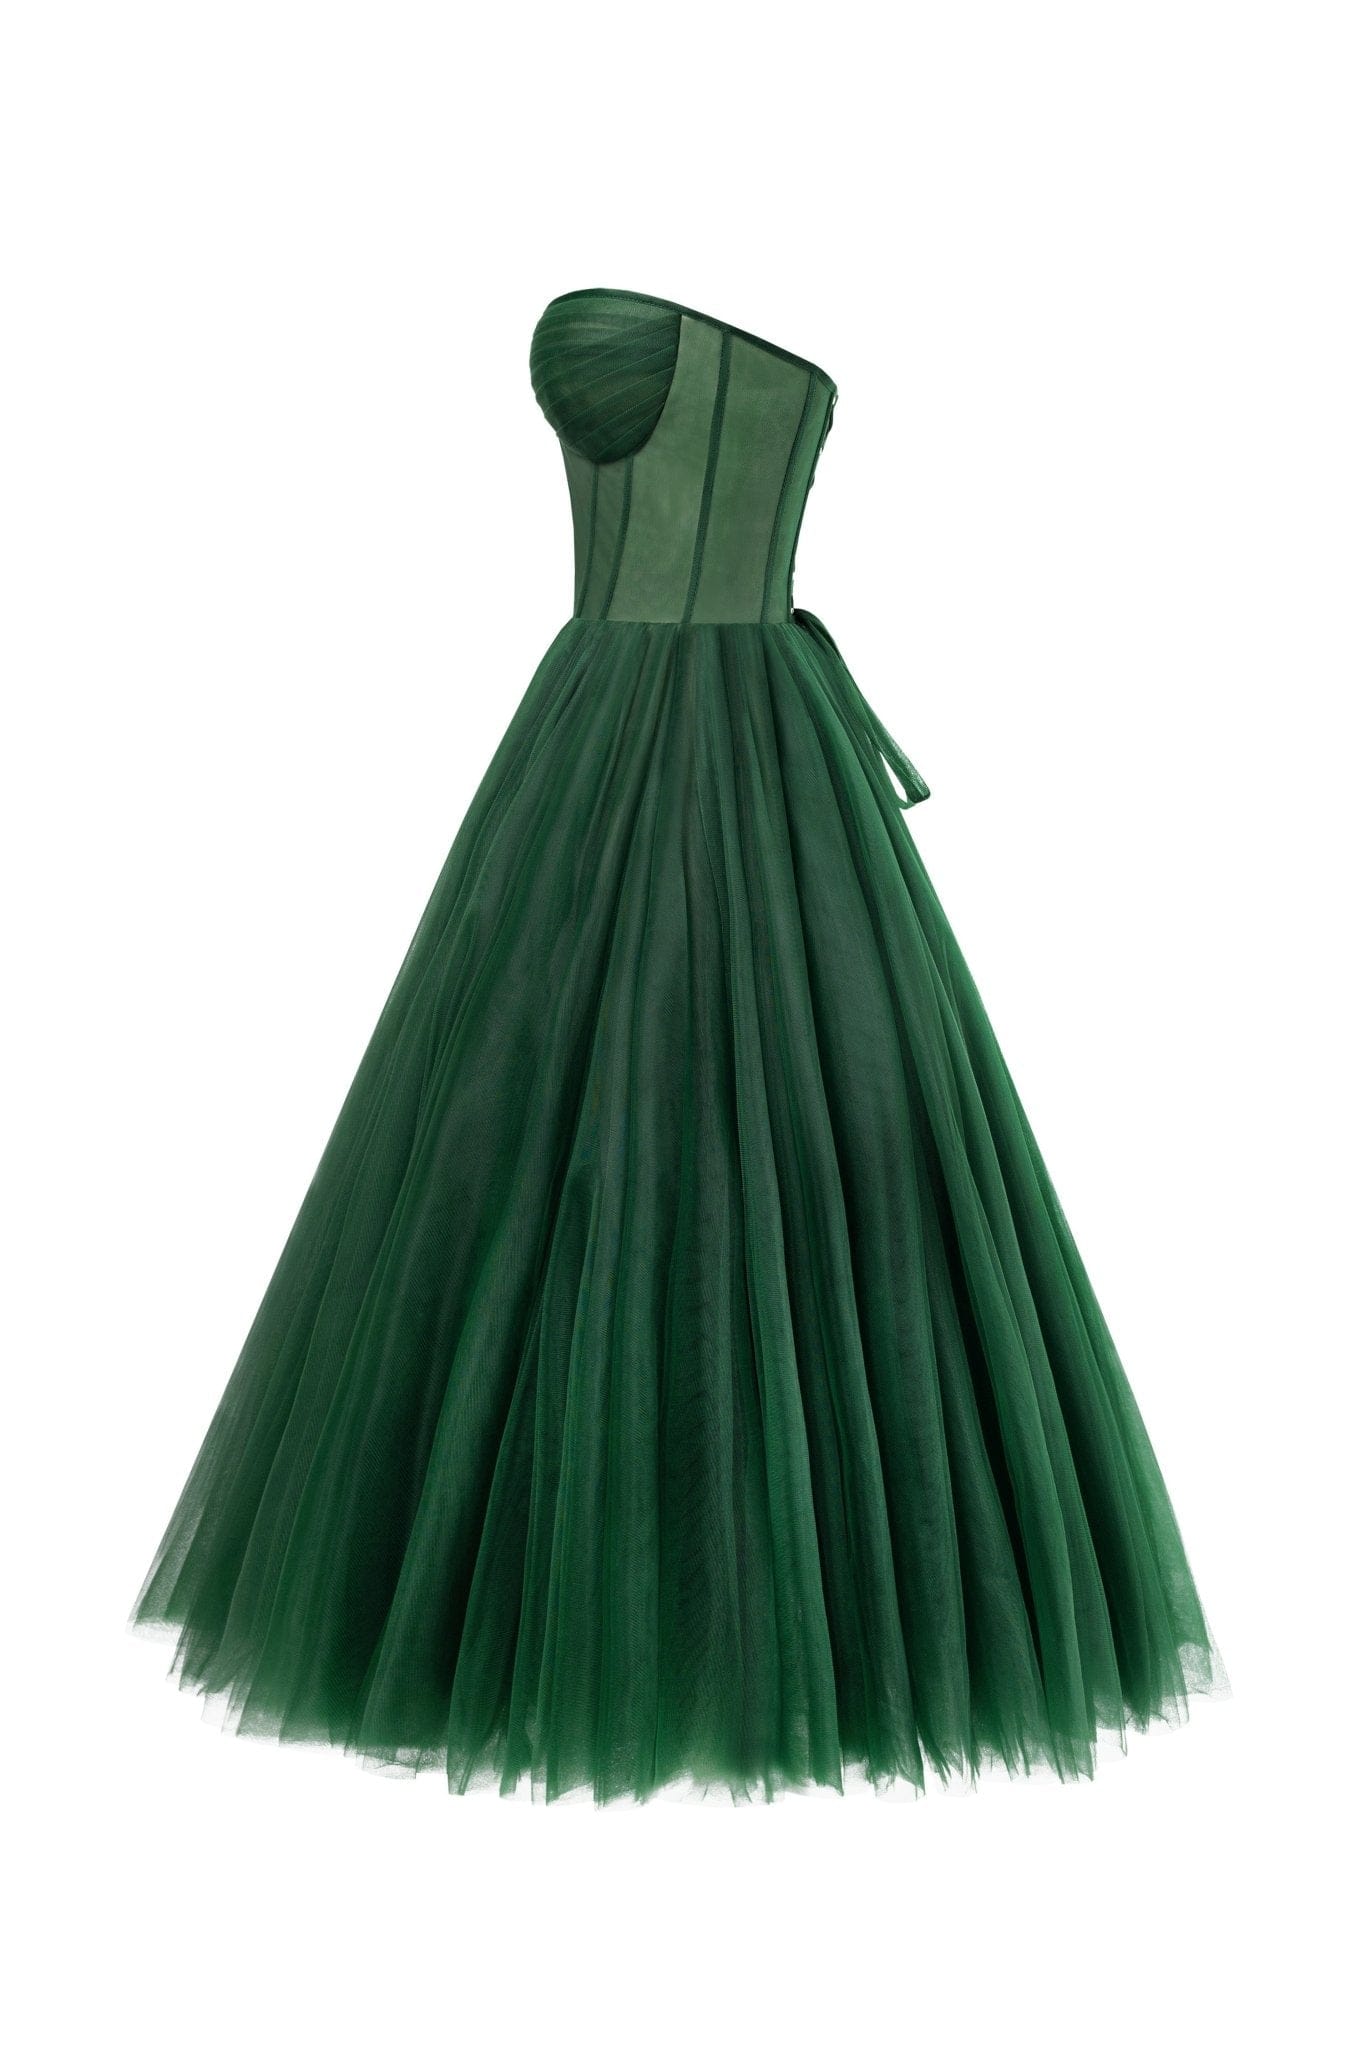 Emerald Green Strapless Puffy Midi Tulle Dress - Milla